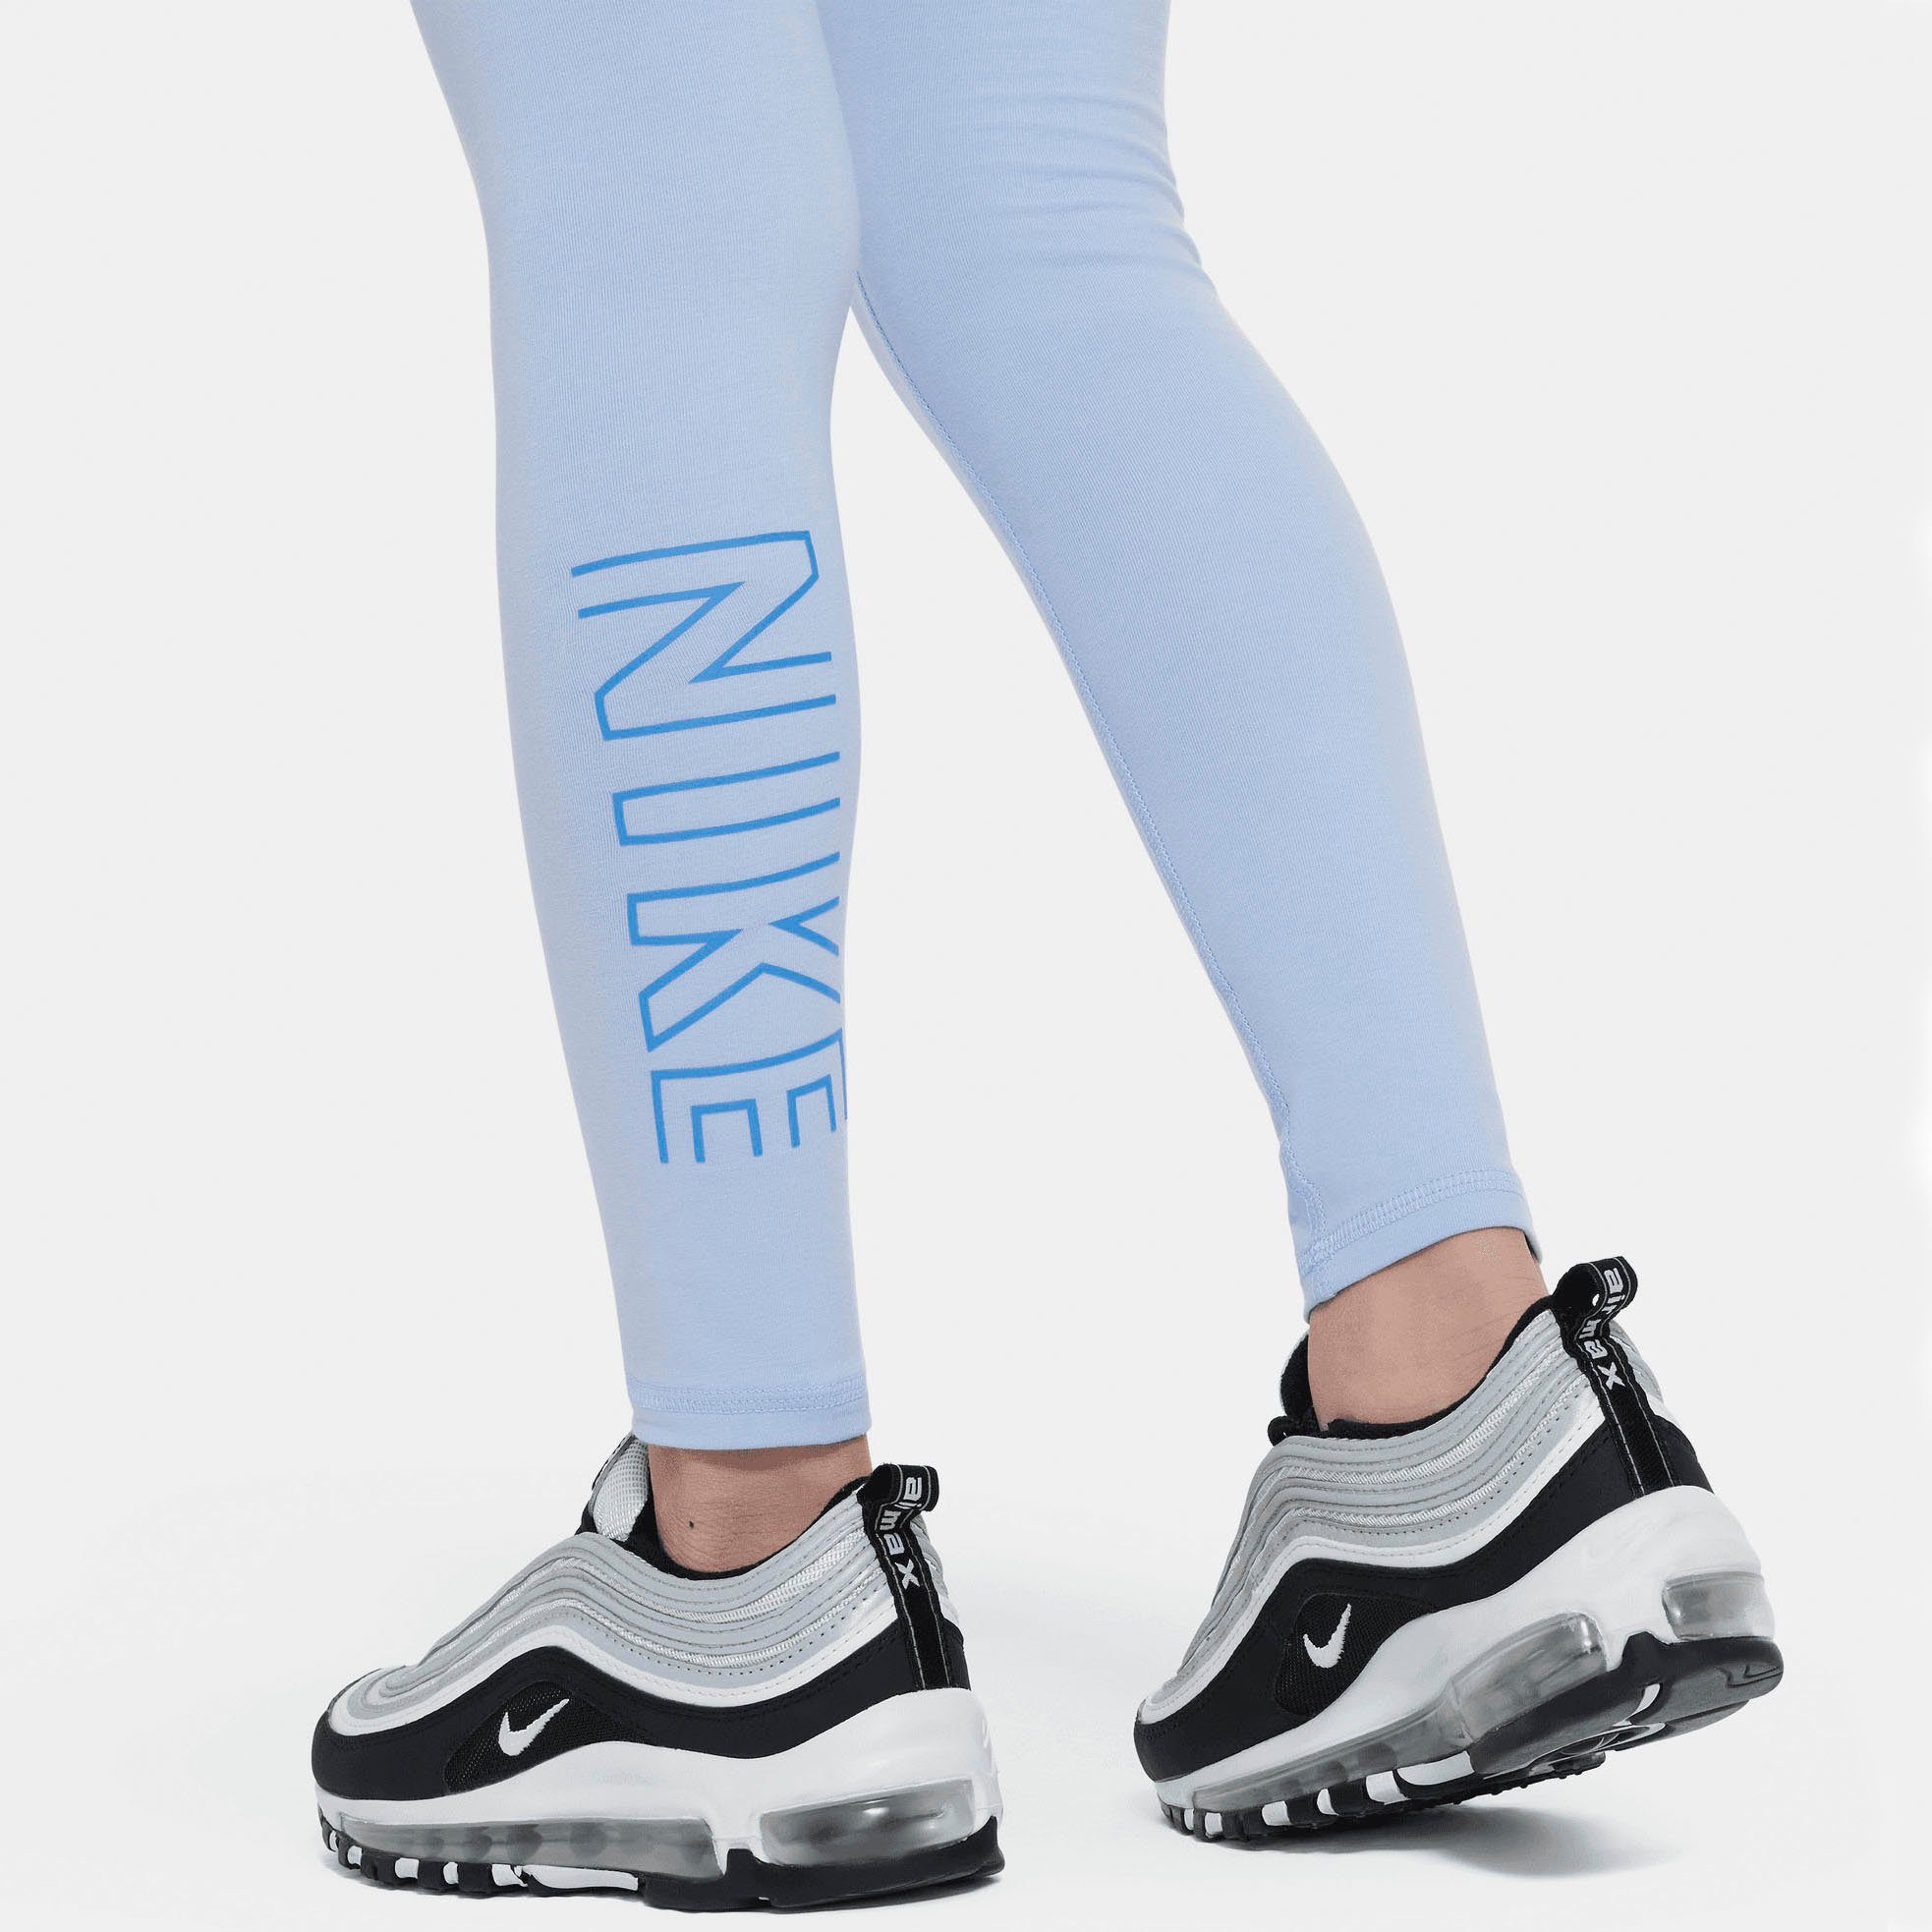 HW Leggings Nike blau SW LGGNG NSW Sportswear G FAVORITES